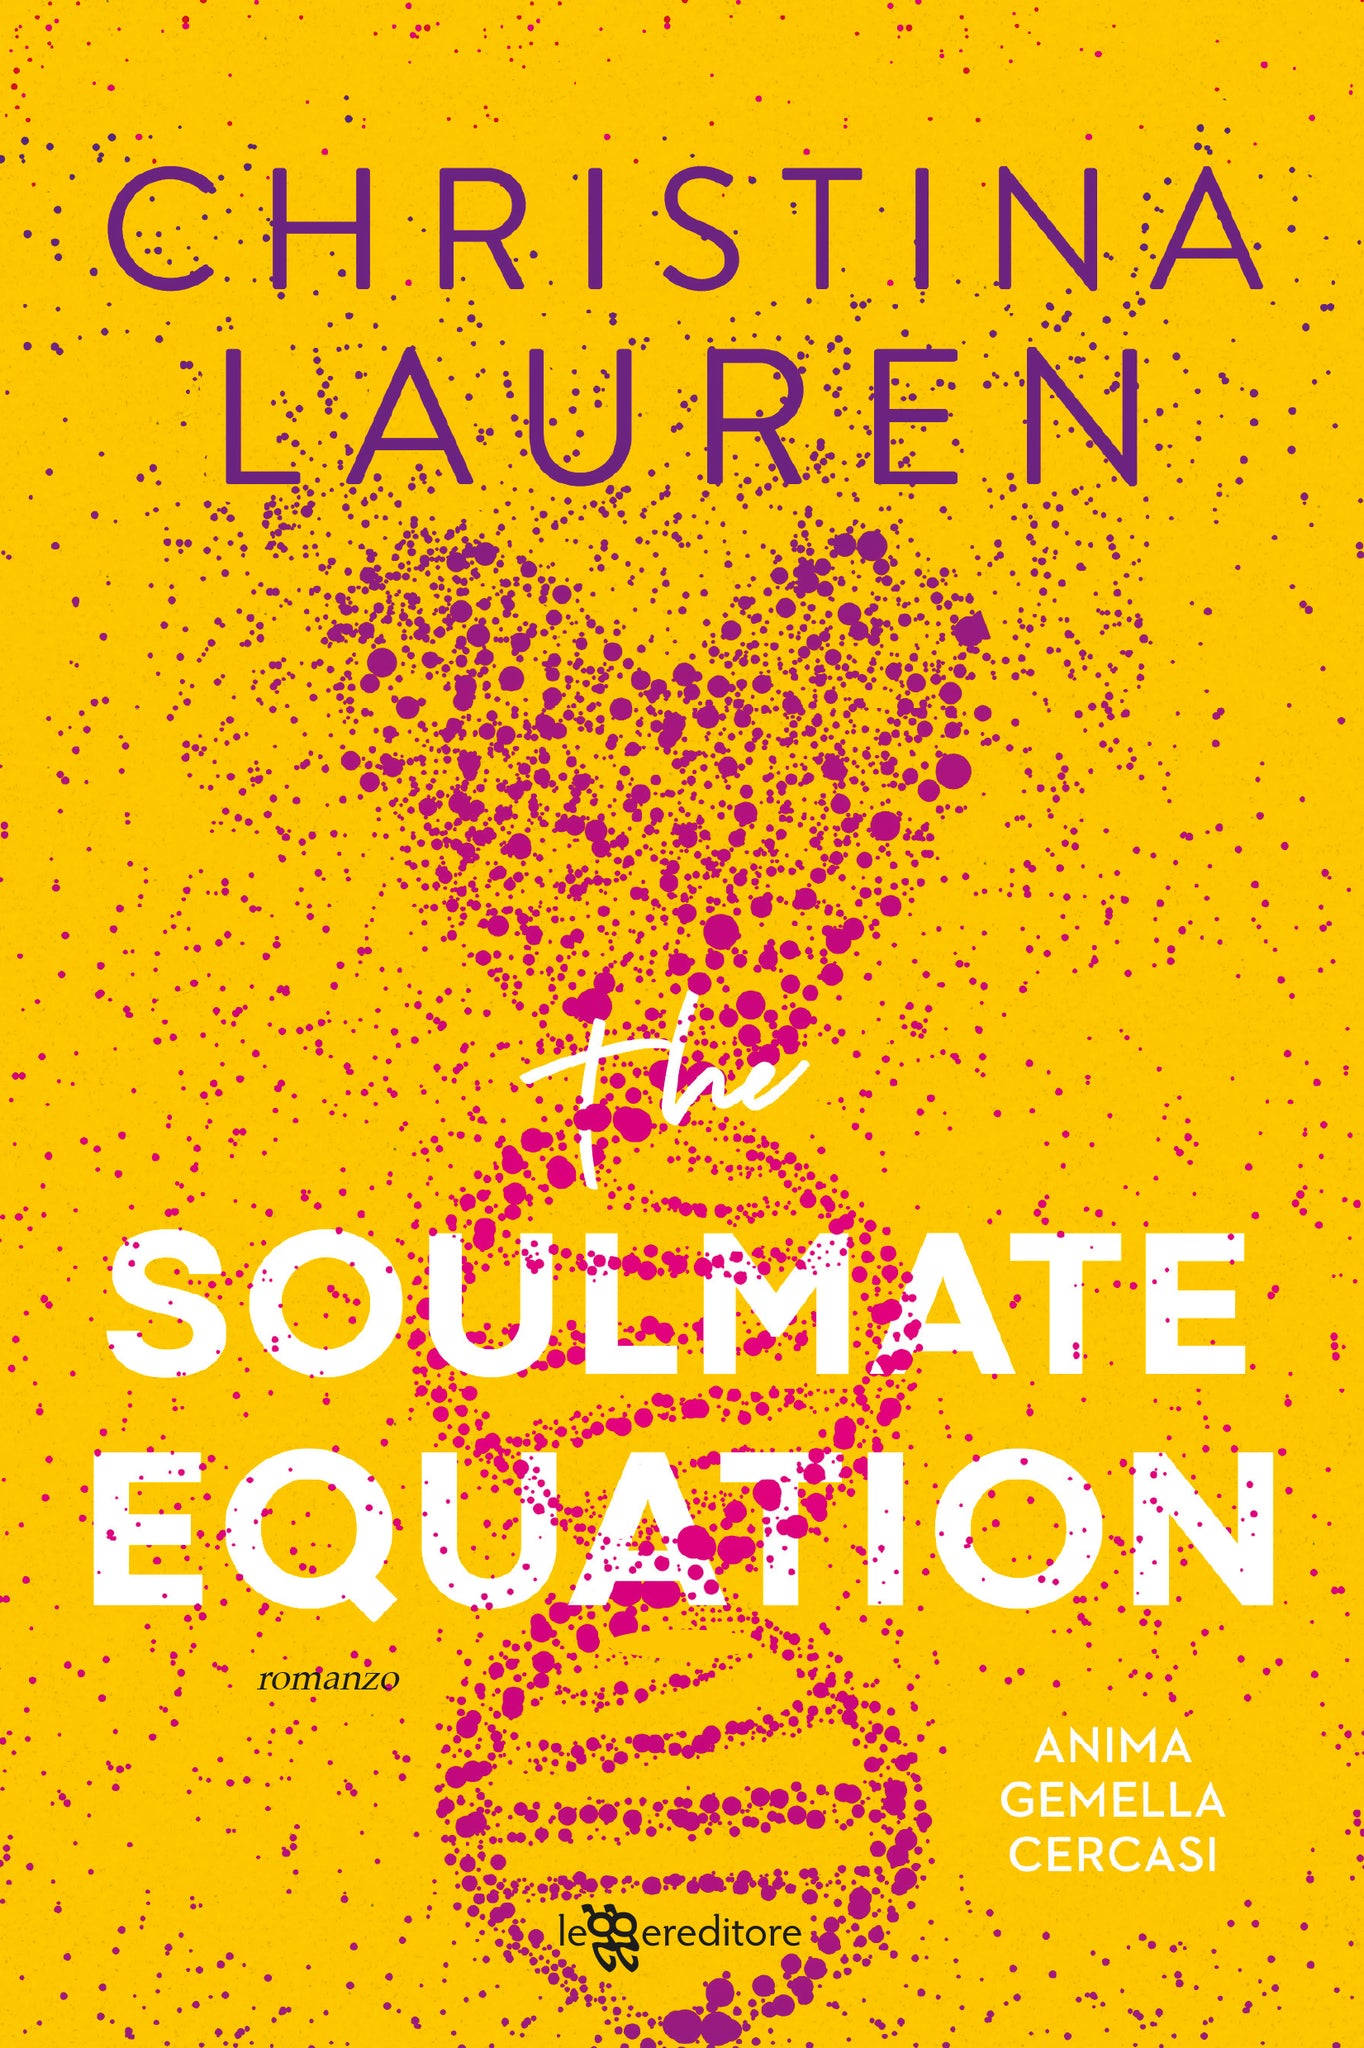 The Soulmate Equation – Anima gemella cercasi